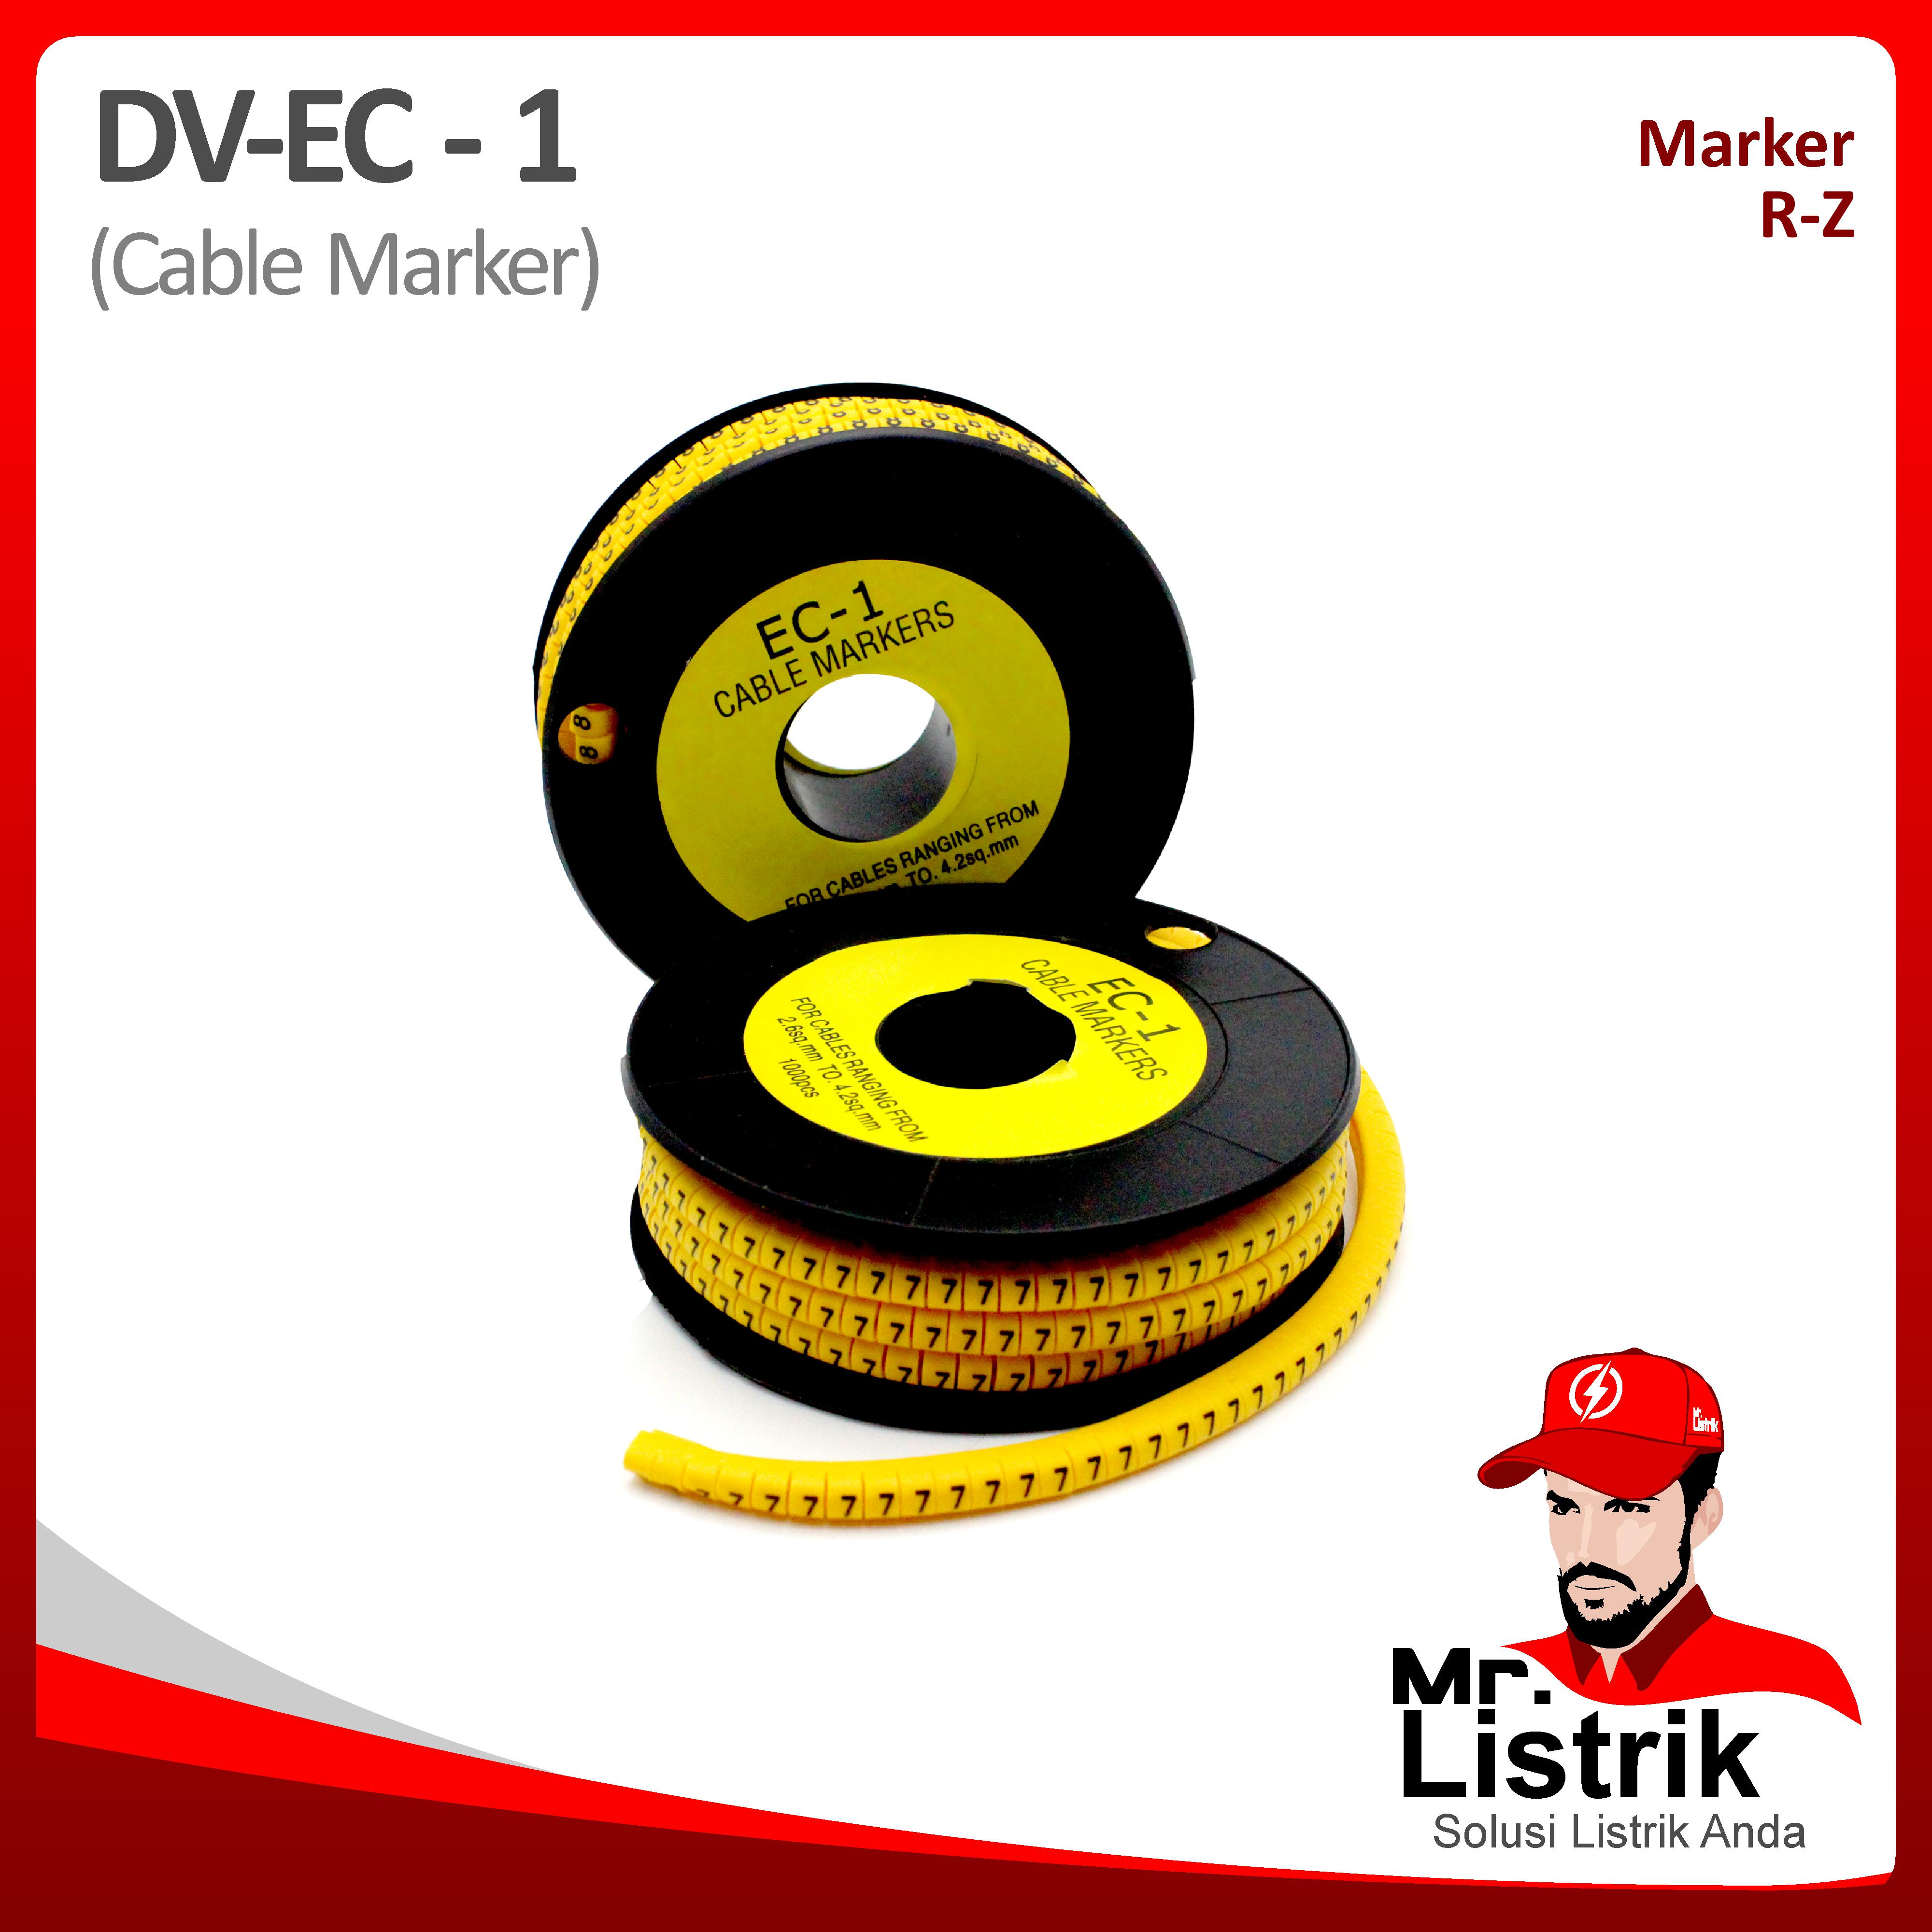 Cable Marker 3-4.2mm 0-9 R-Z + - DV EC-1